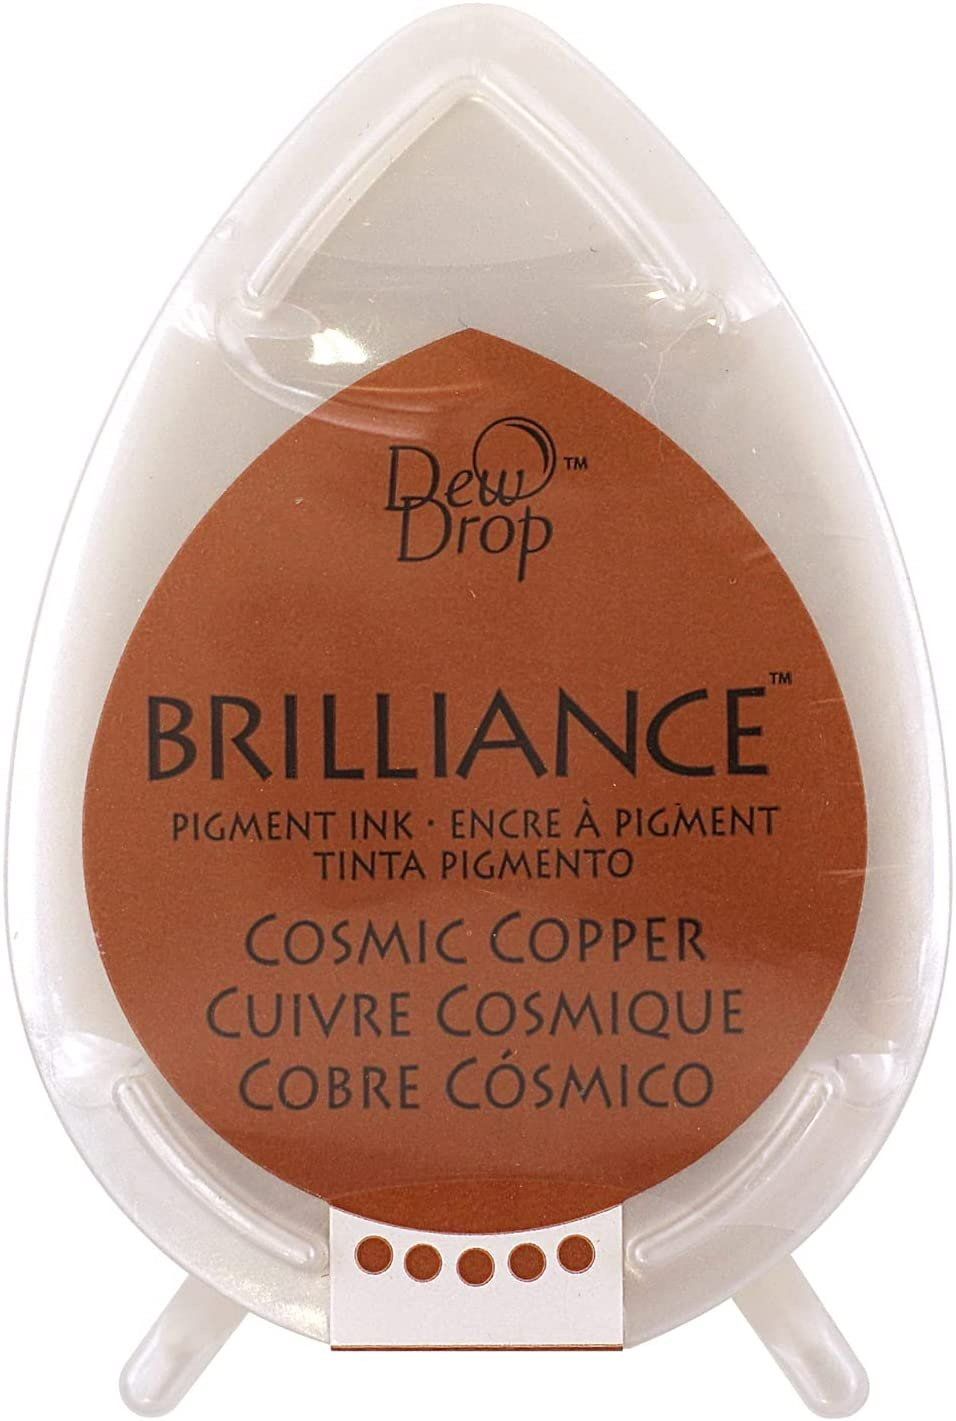 Brilliance Dew Drop Ink Pad Cosmic Copper